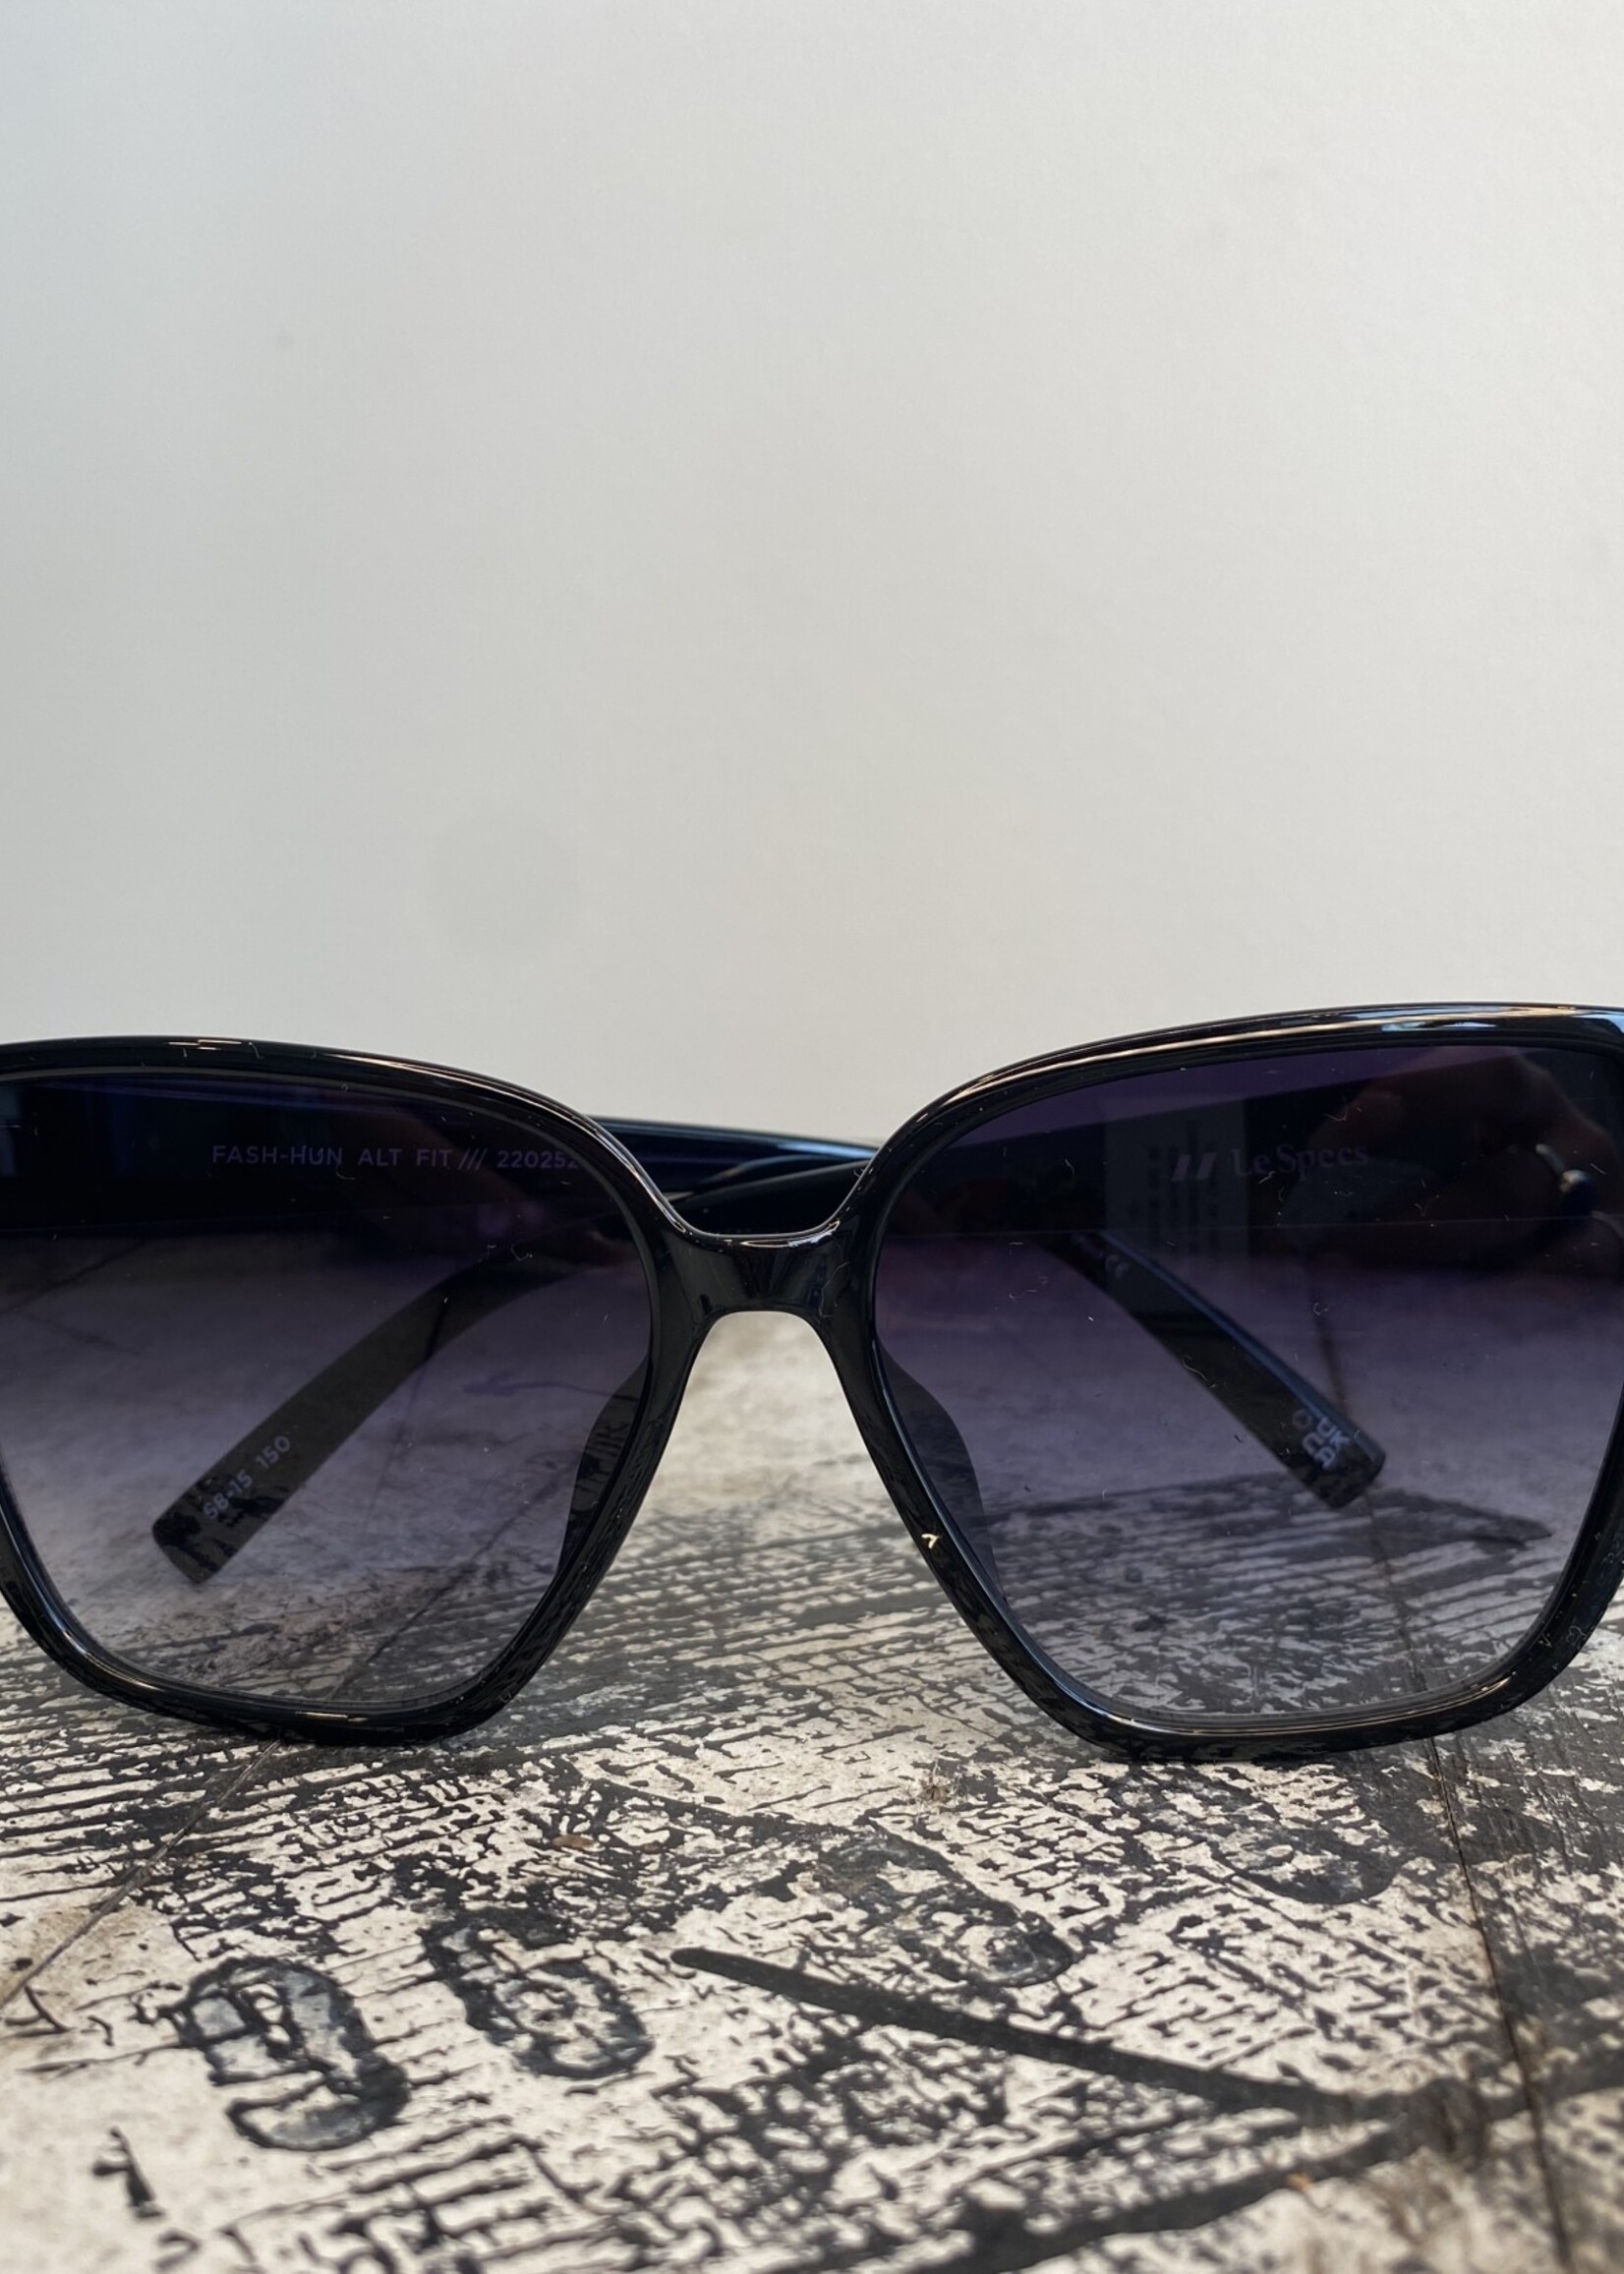 Le Specs Fash-Hun Sunglasses